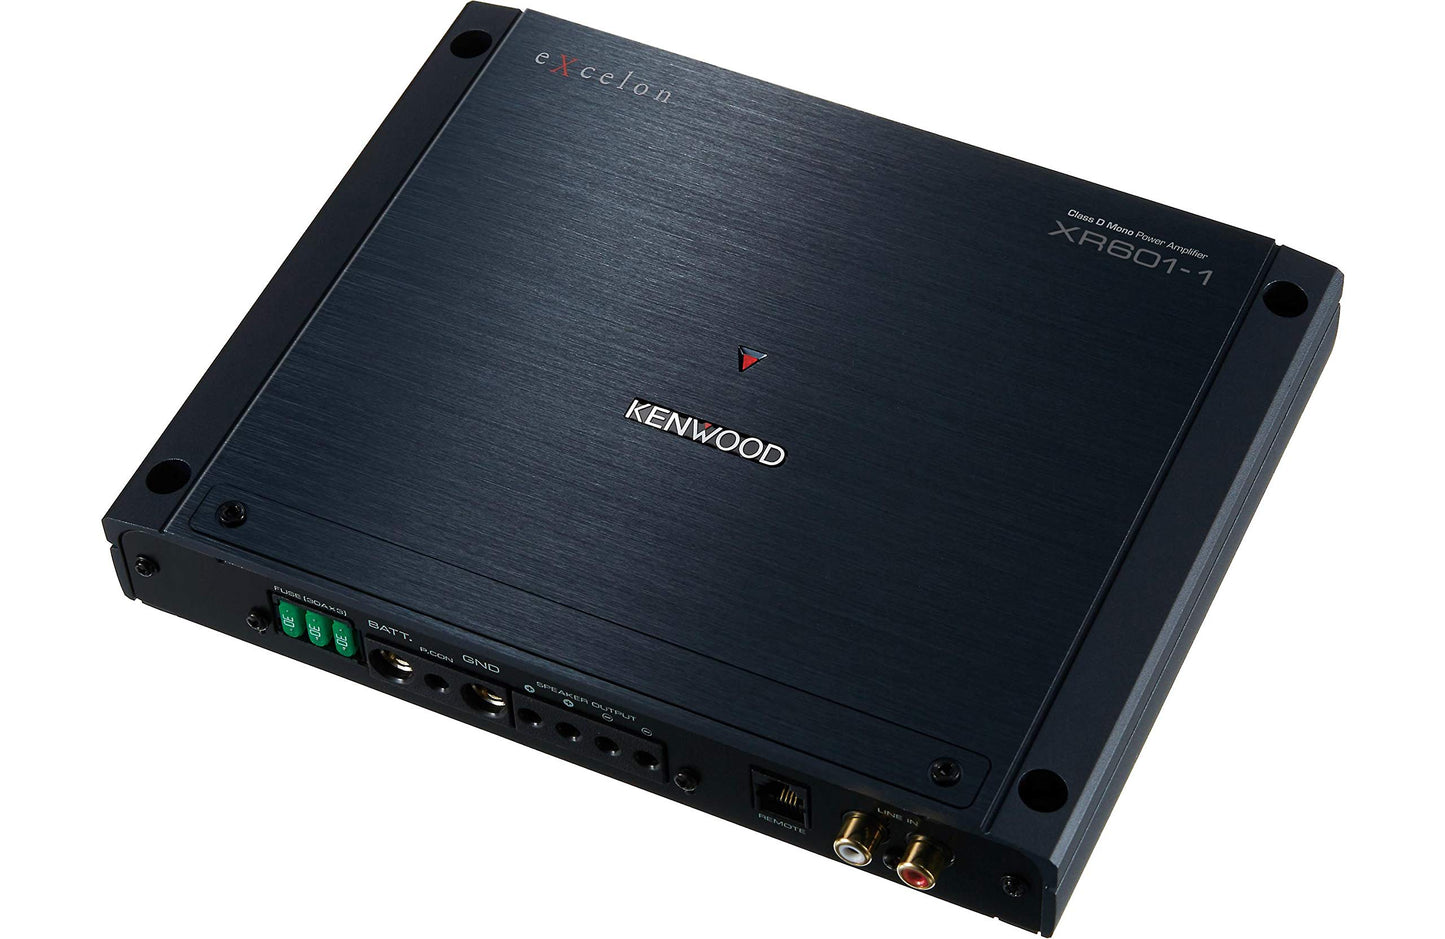 Kenwood XR601-1 eXcelon 600-Watt Monoblock Subwoofer Amplifier